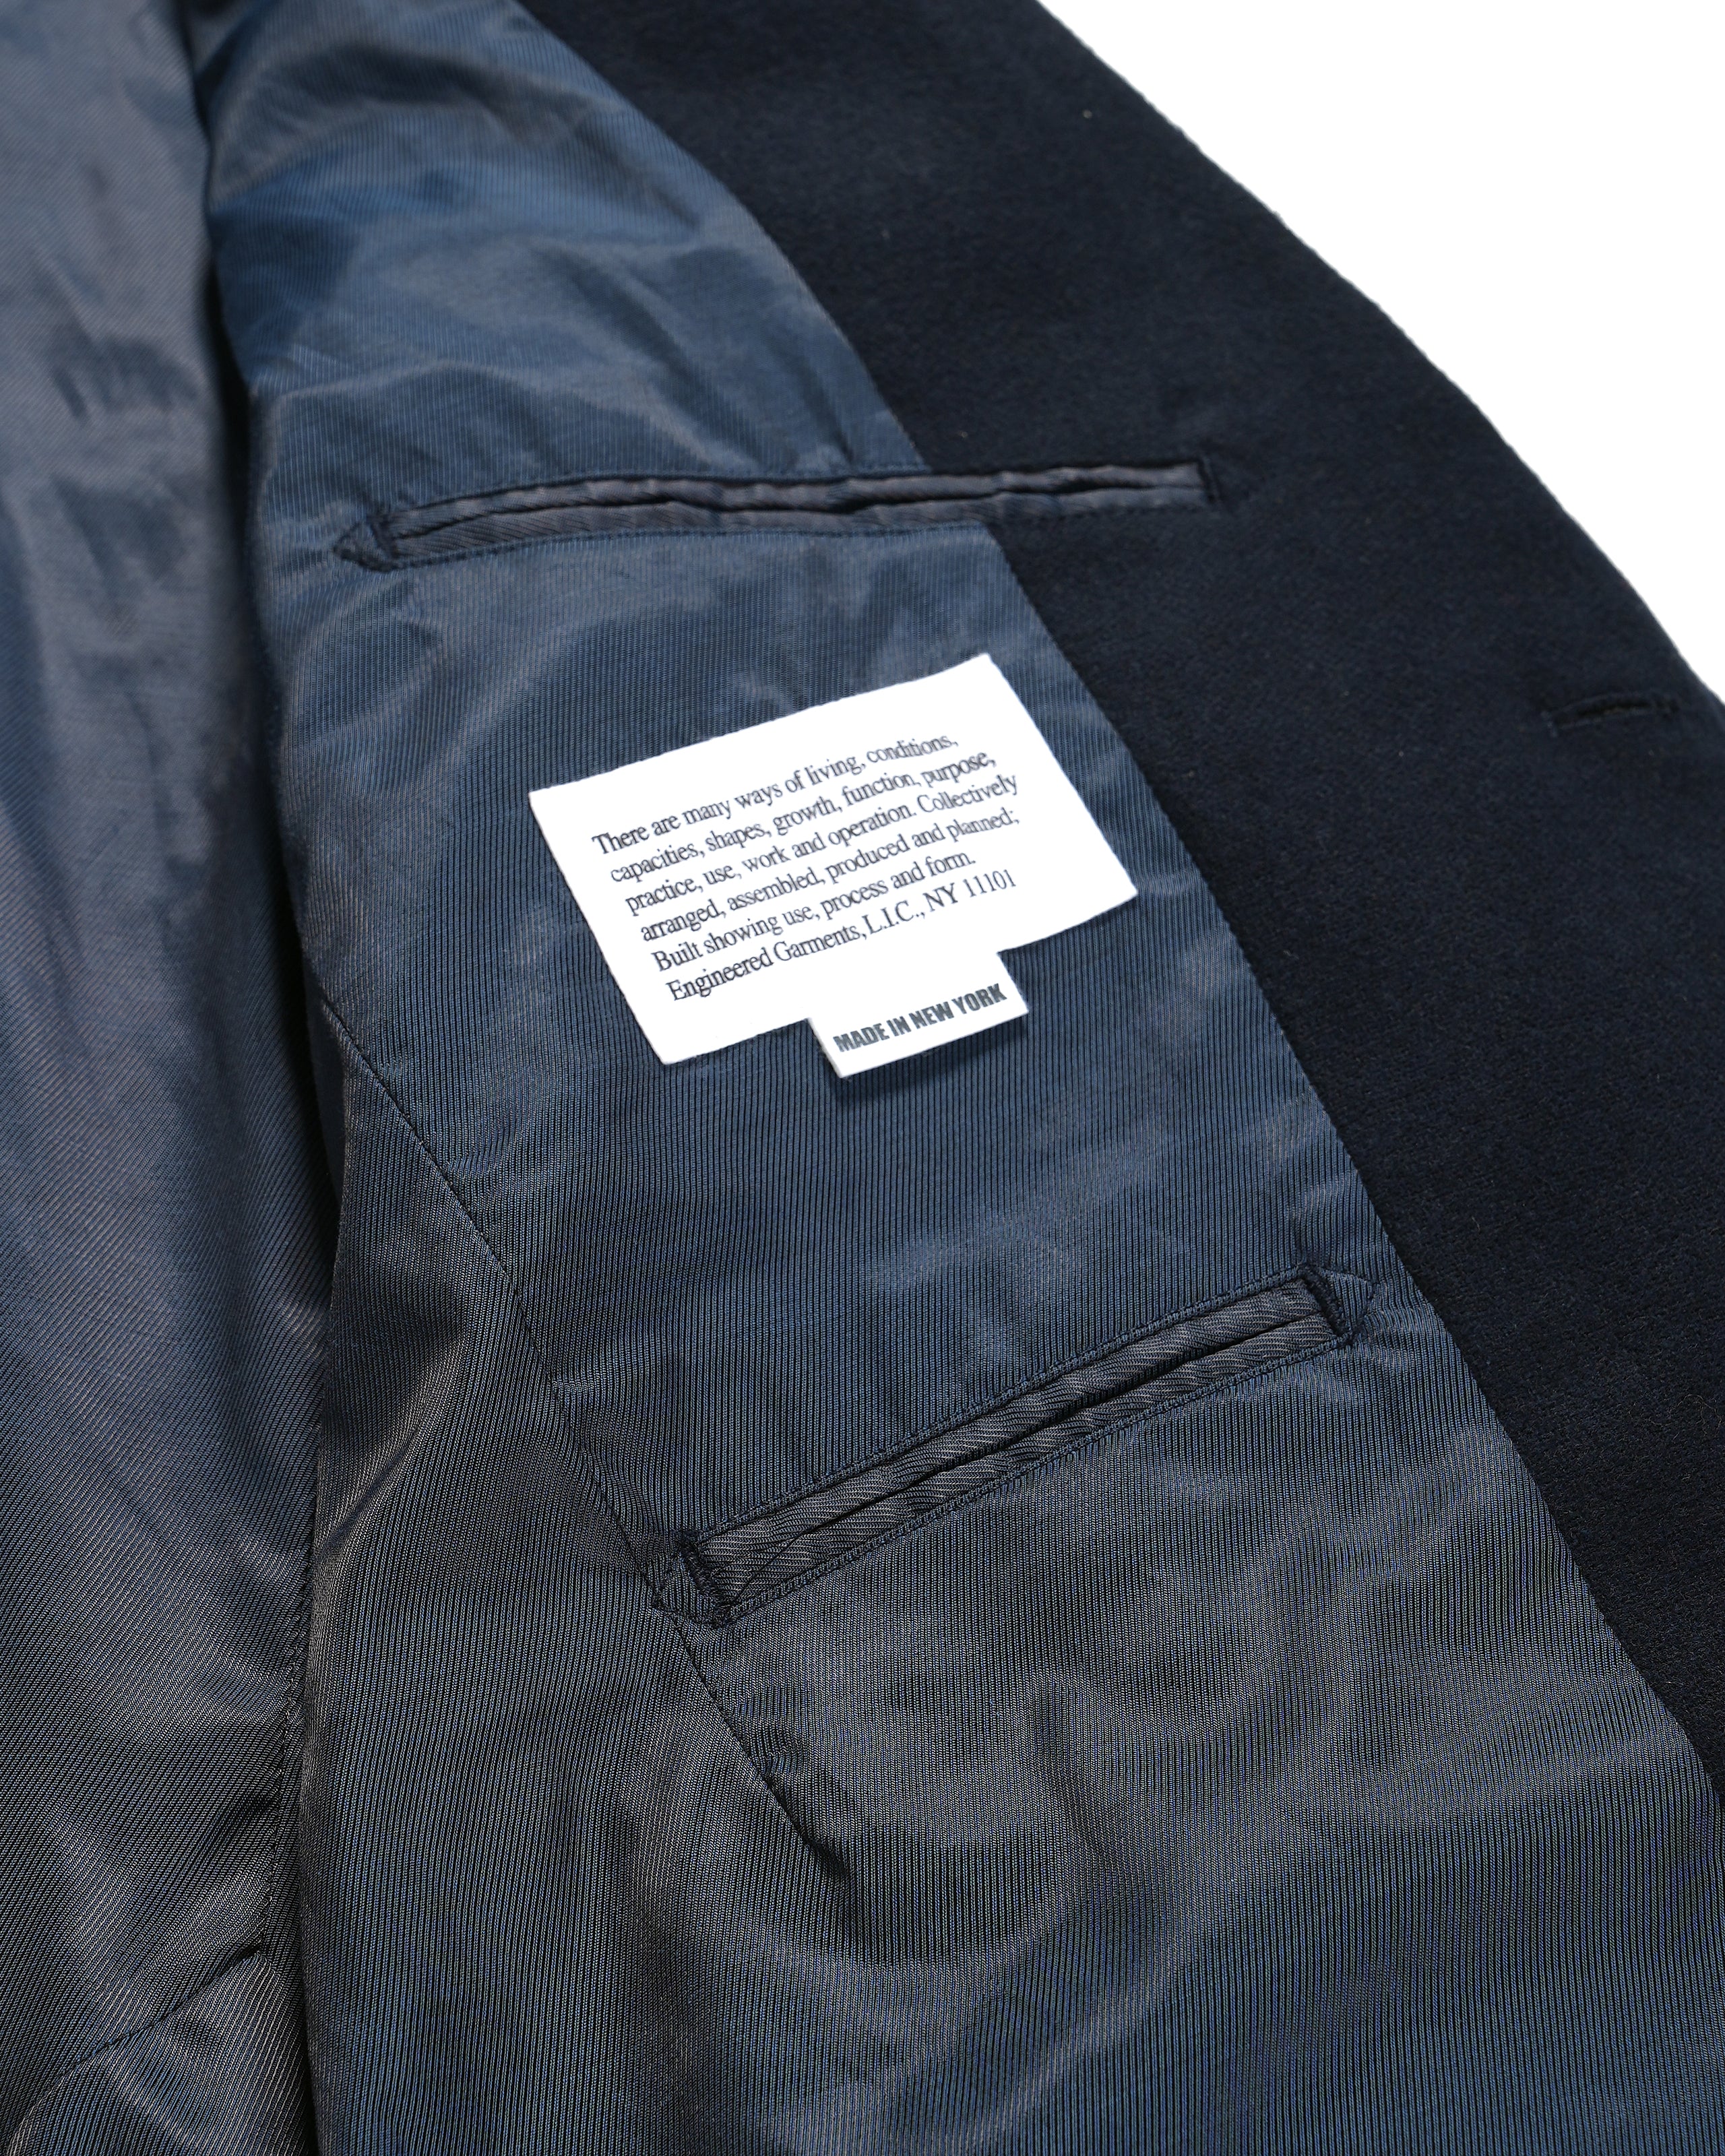 Andover Jacket - Dark Navy Wool Uniform Serge